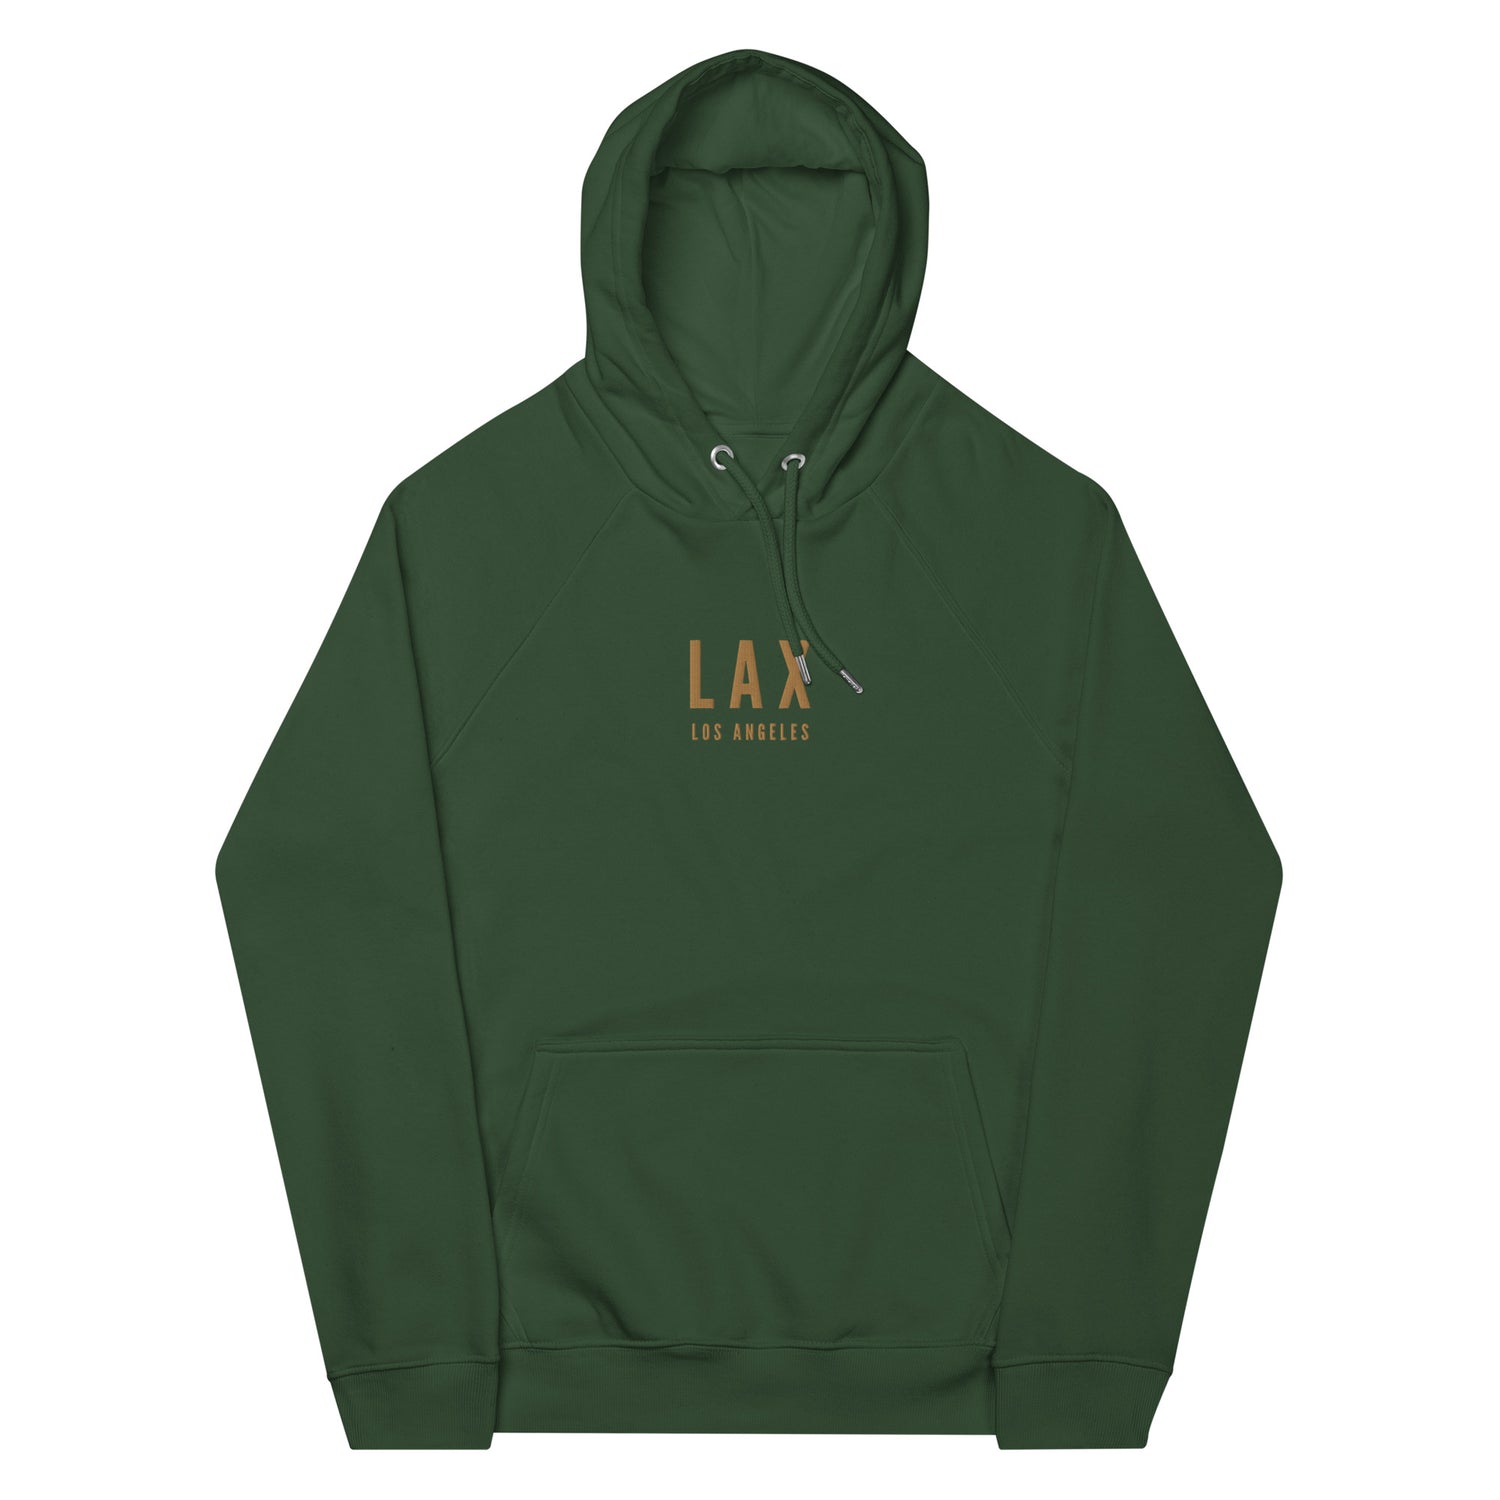 Los Angeles California Hoodies and Sweatshirts • LAX Airport Code